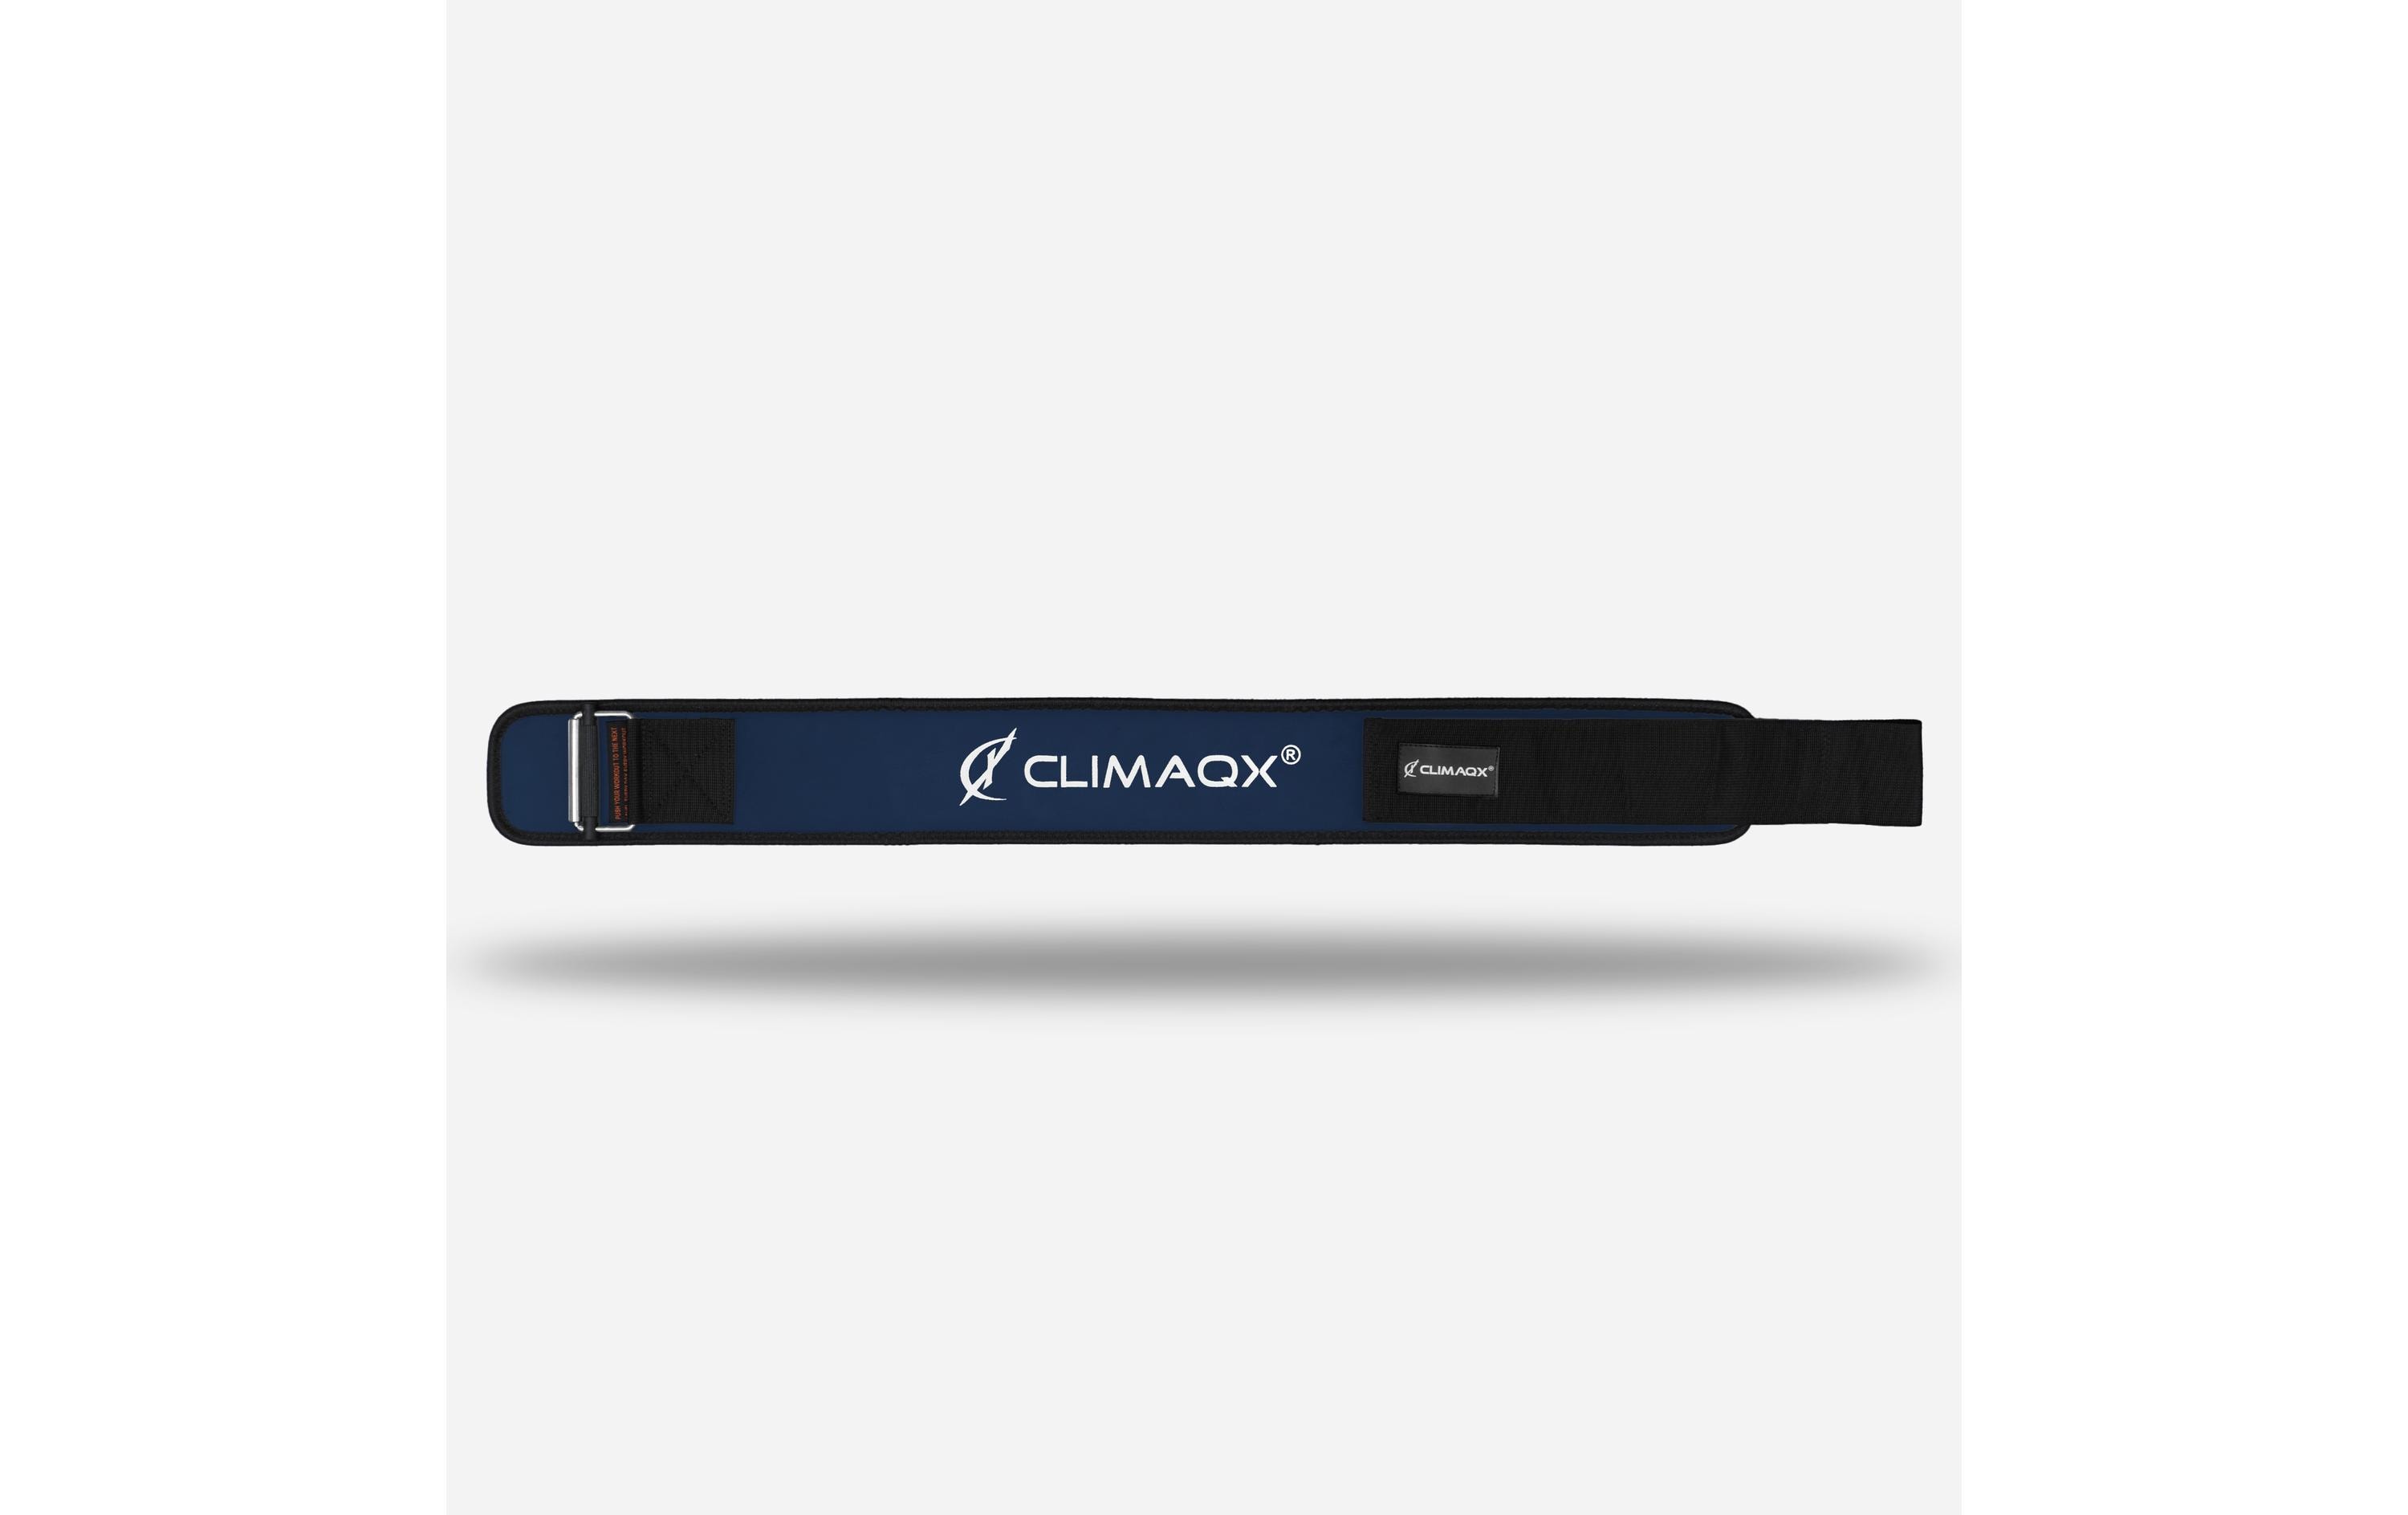 Climaqx Evolution Lifting Belt S